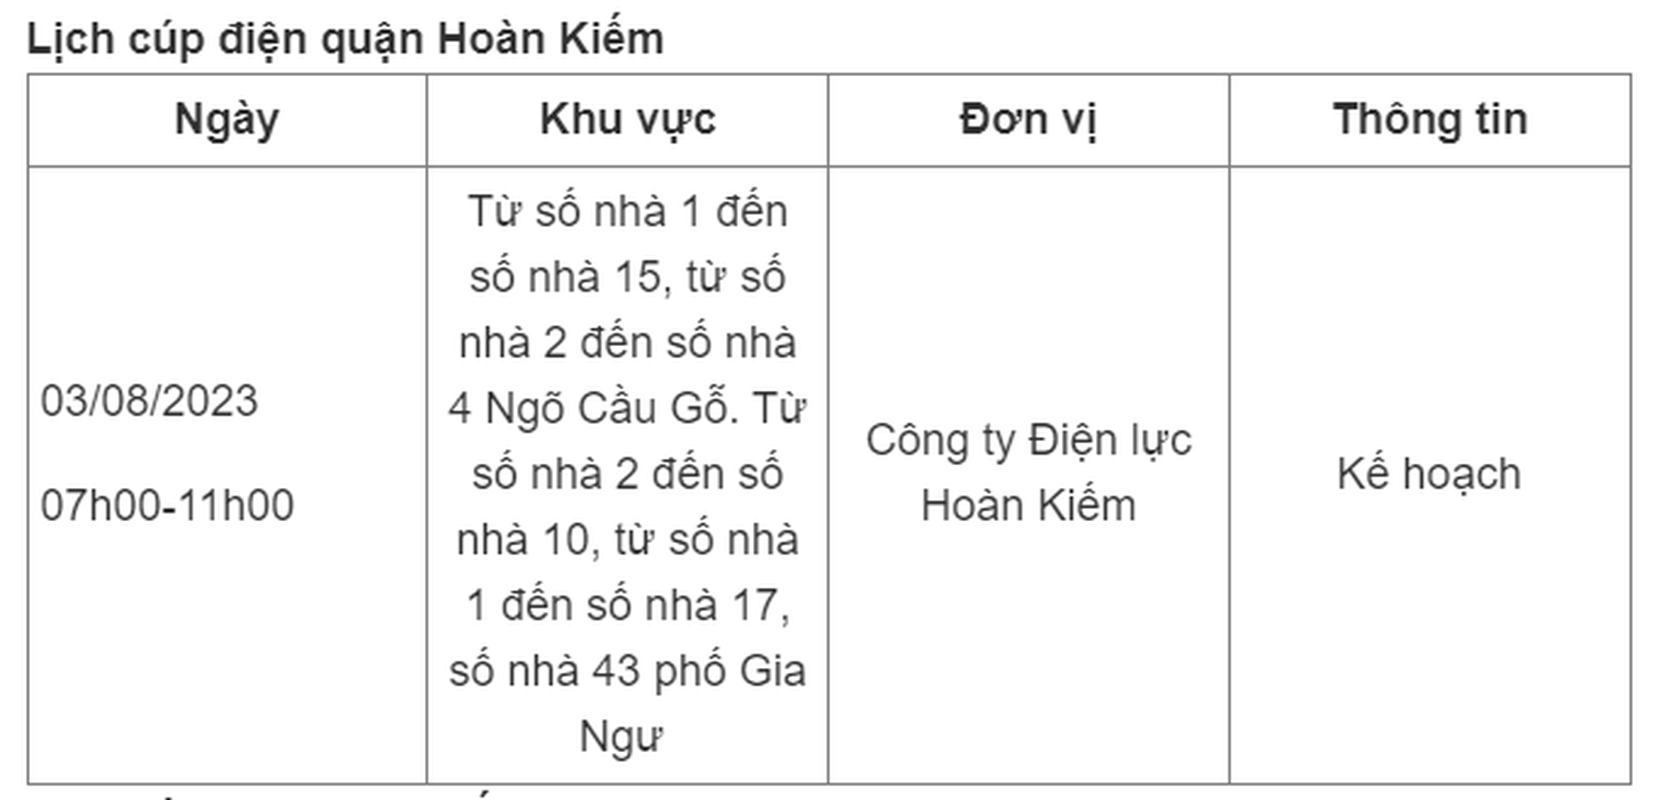 Lich cup dien Ha Noi ngay 3/8: Nhieu noi mat dien 8-9 tieng-Hinh-2